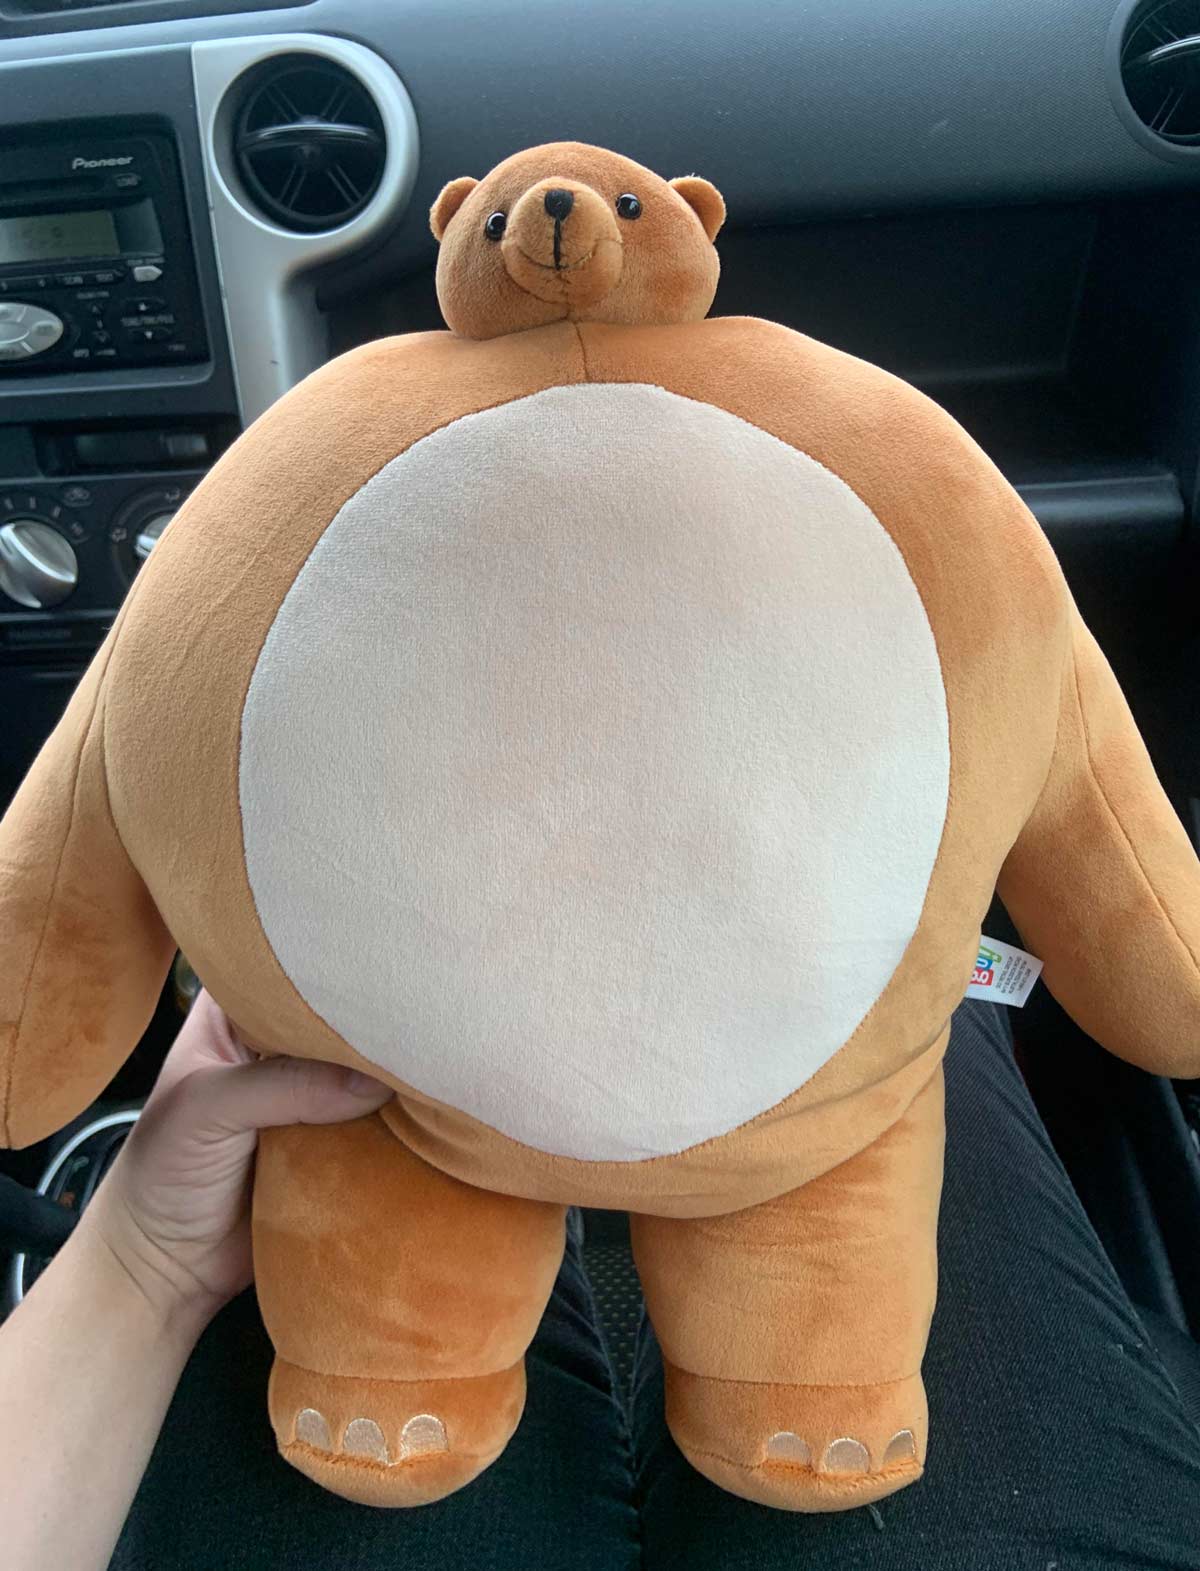 The stuffed bear I got today